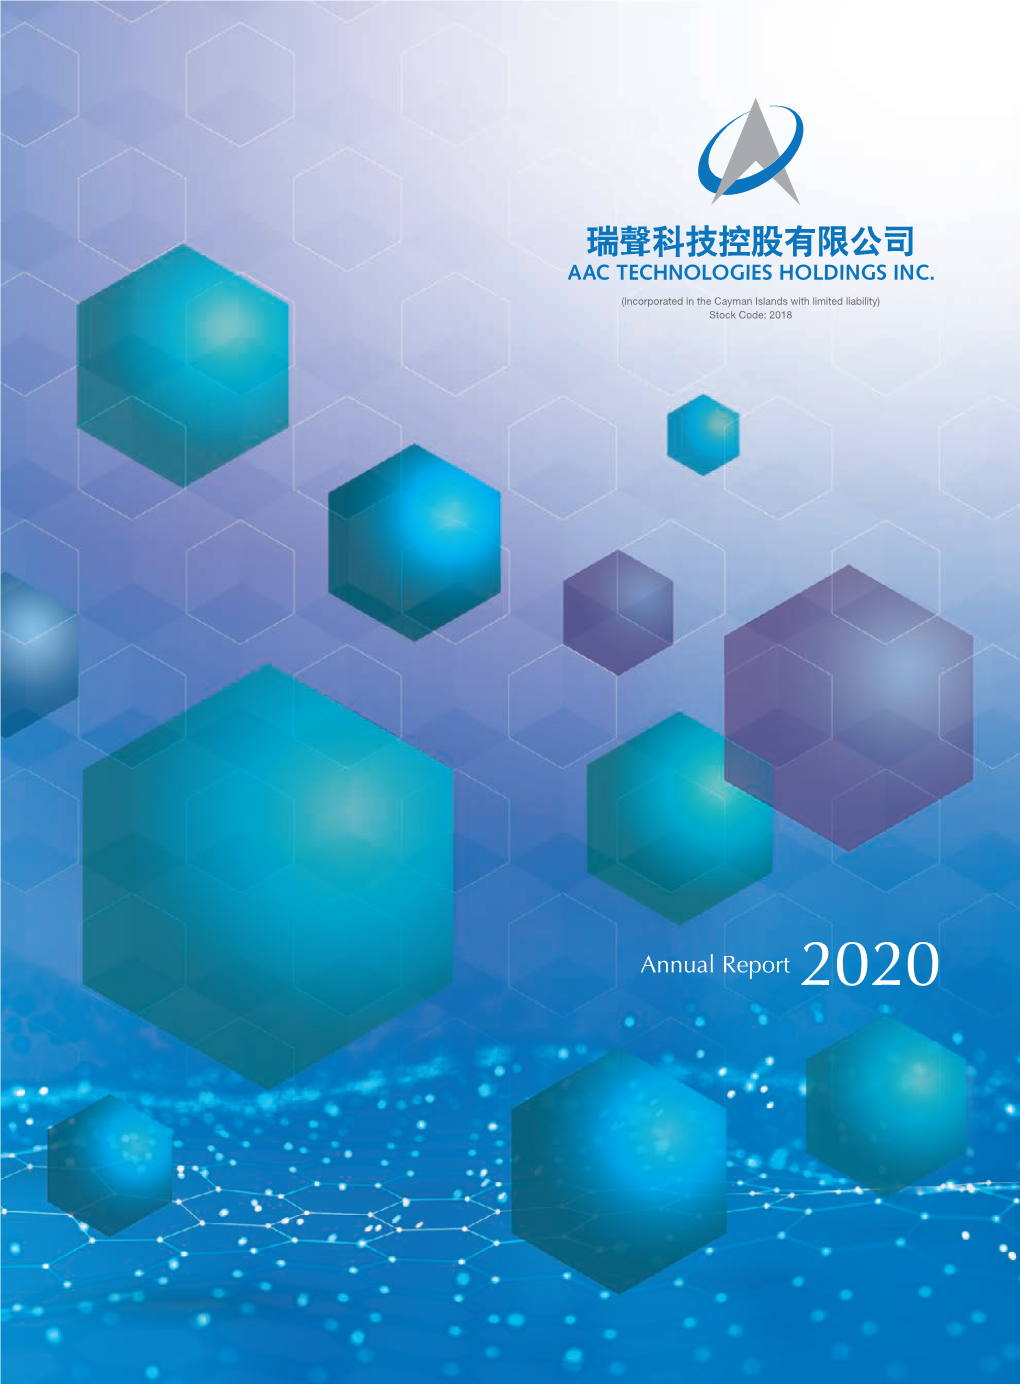 Annual Report 2020 Core Development Strategies